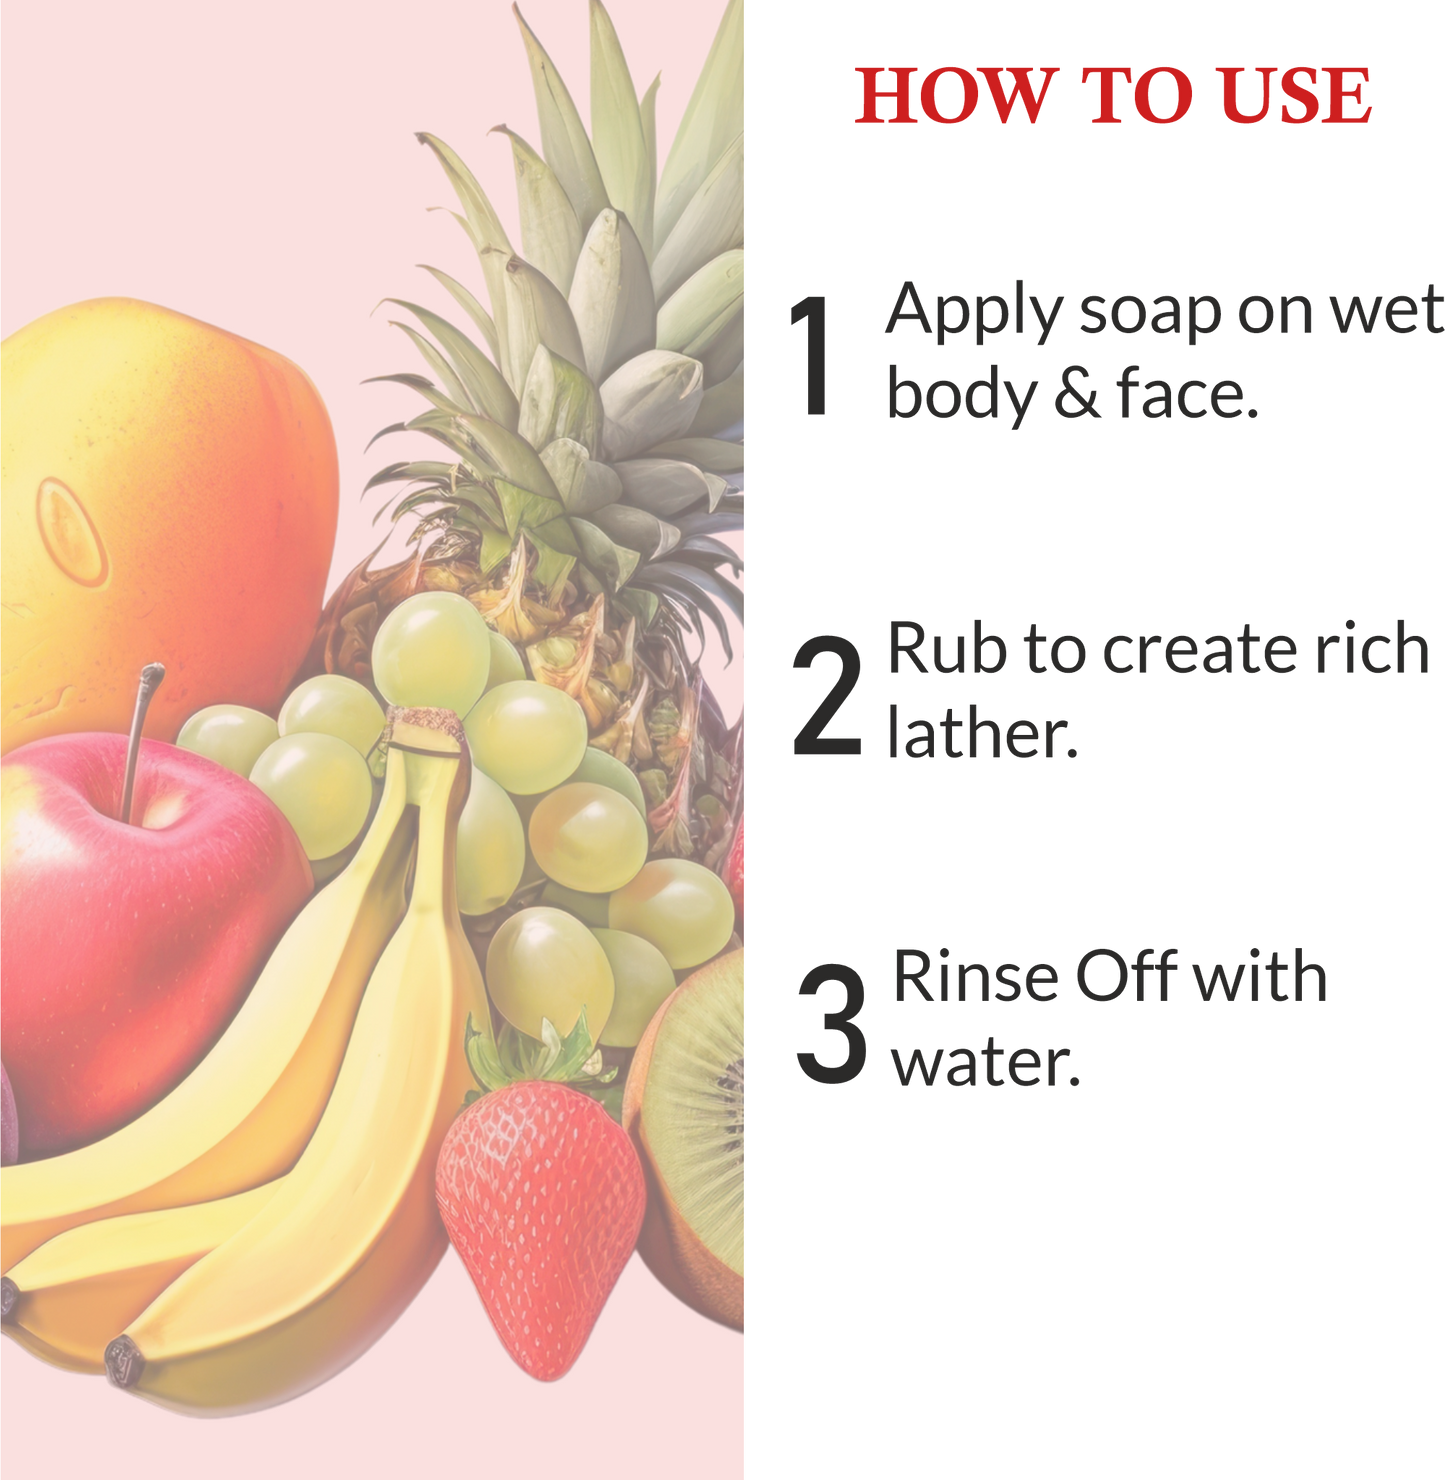 khadi mix fruit soap